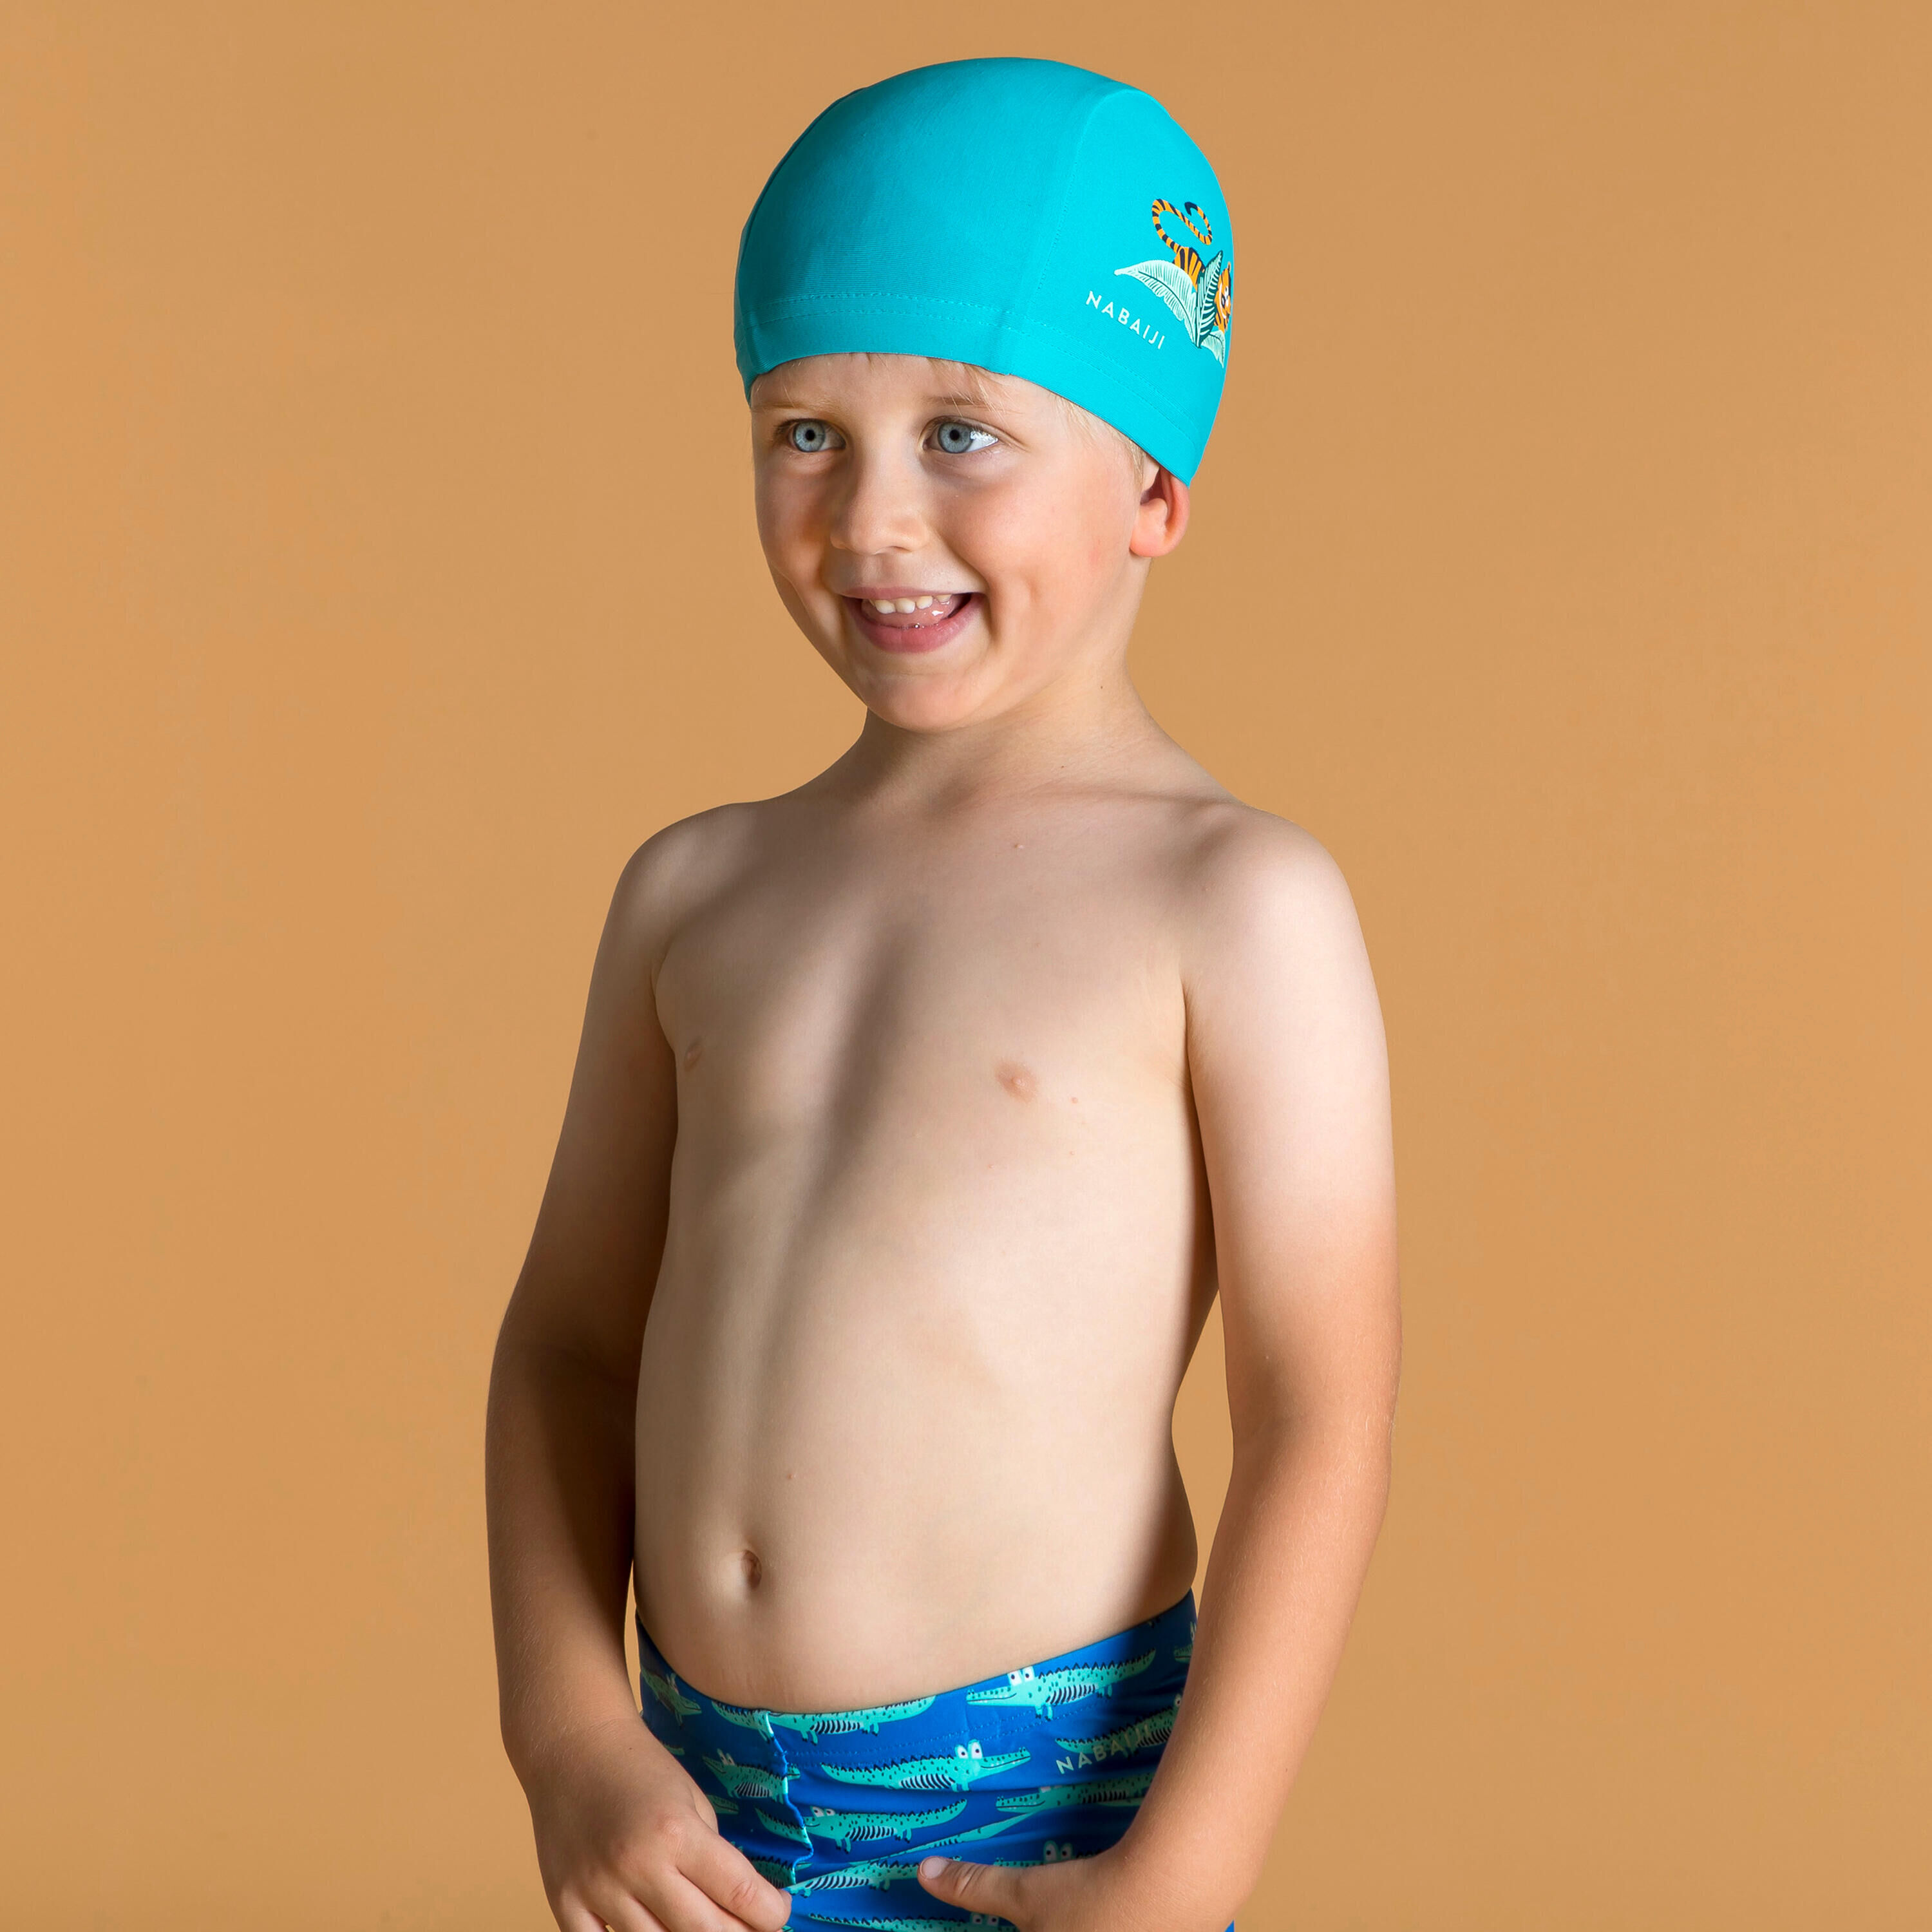 Speedo Elastomeric-Fit Silicone Youth & Adult Swim Cap, Assorted